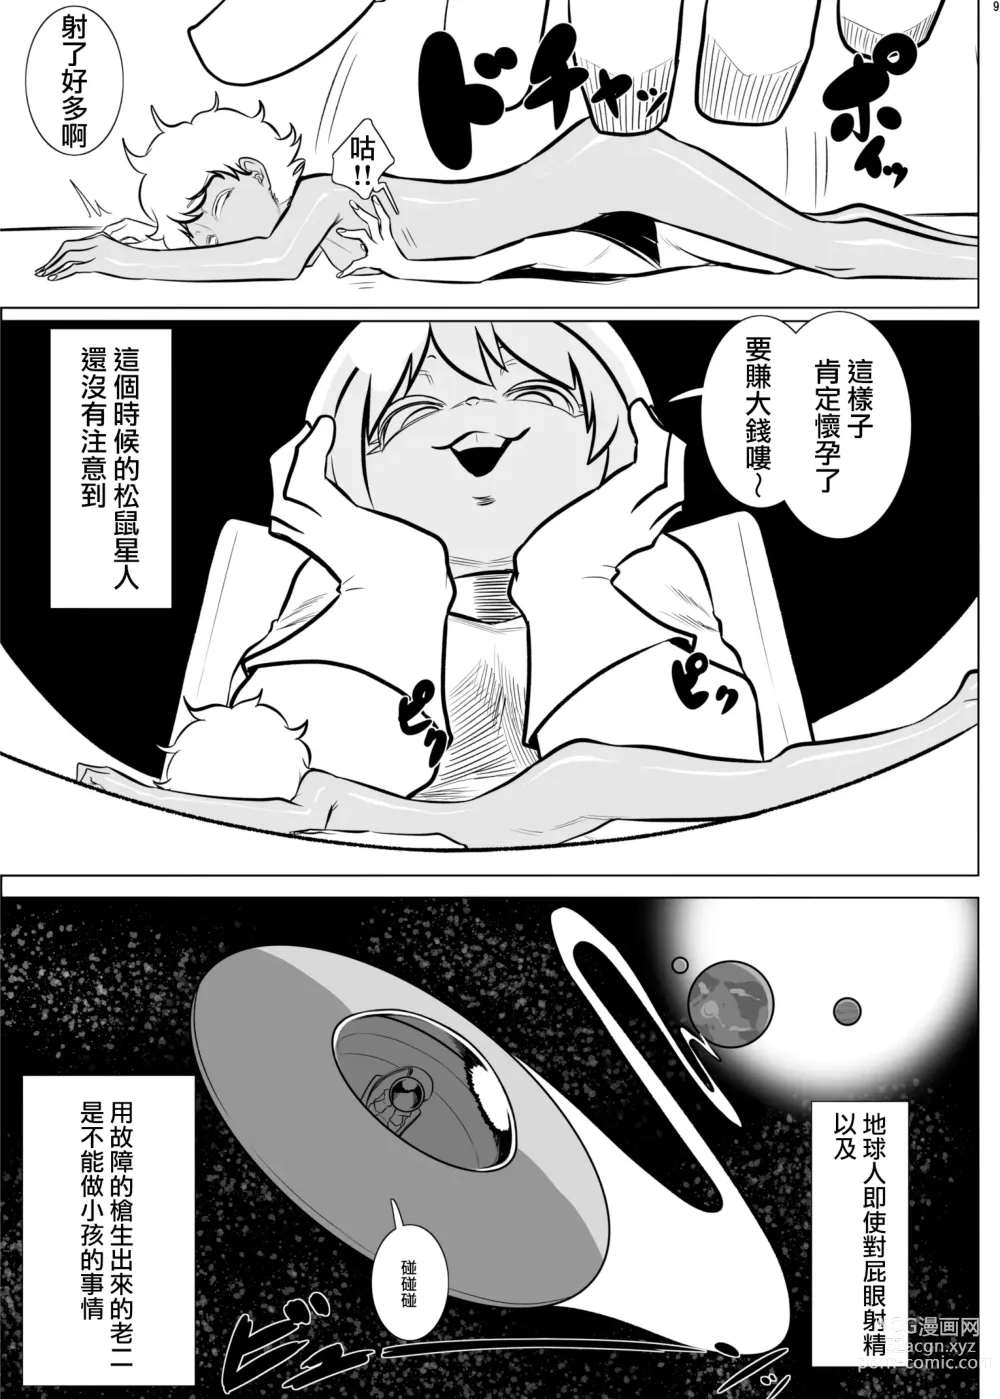 Page 9 of doujinshi Chikyuujin Youshoku Keikaku